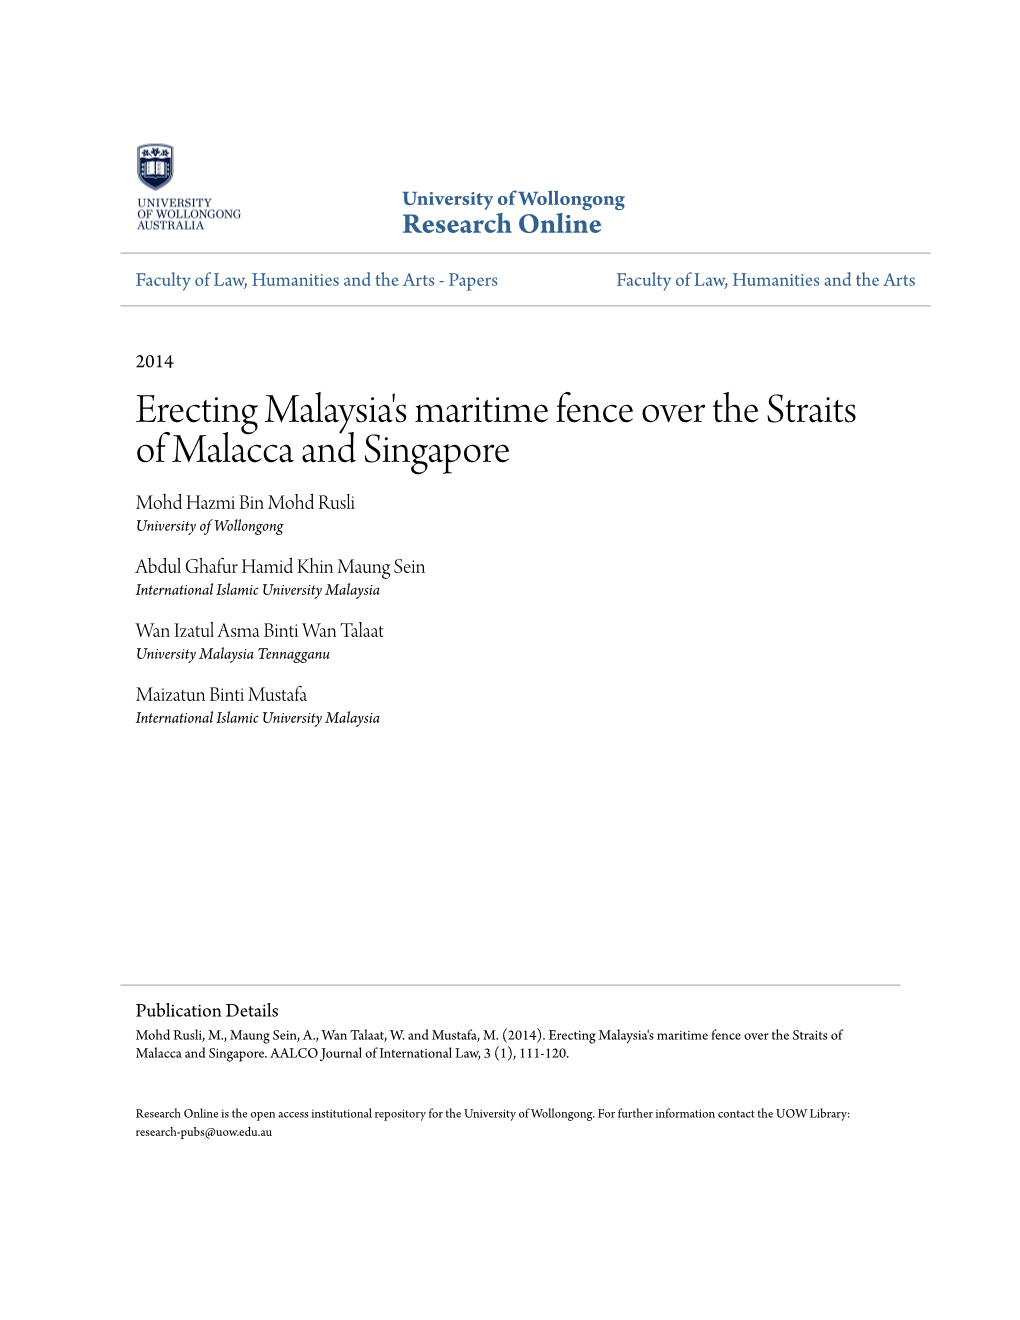 Erecting Malaysia's Maritime Fence Over the Straits of Malacca and Singapore Mohd Hazmi Bin Mohd Rusli University of Wollongong